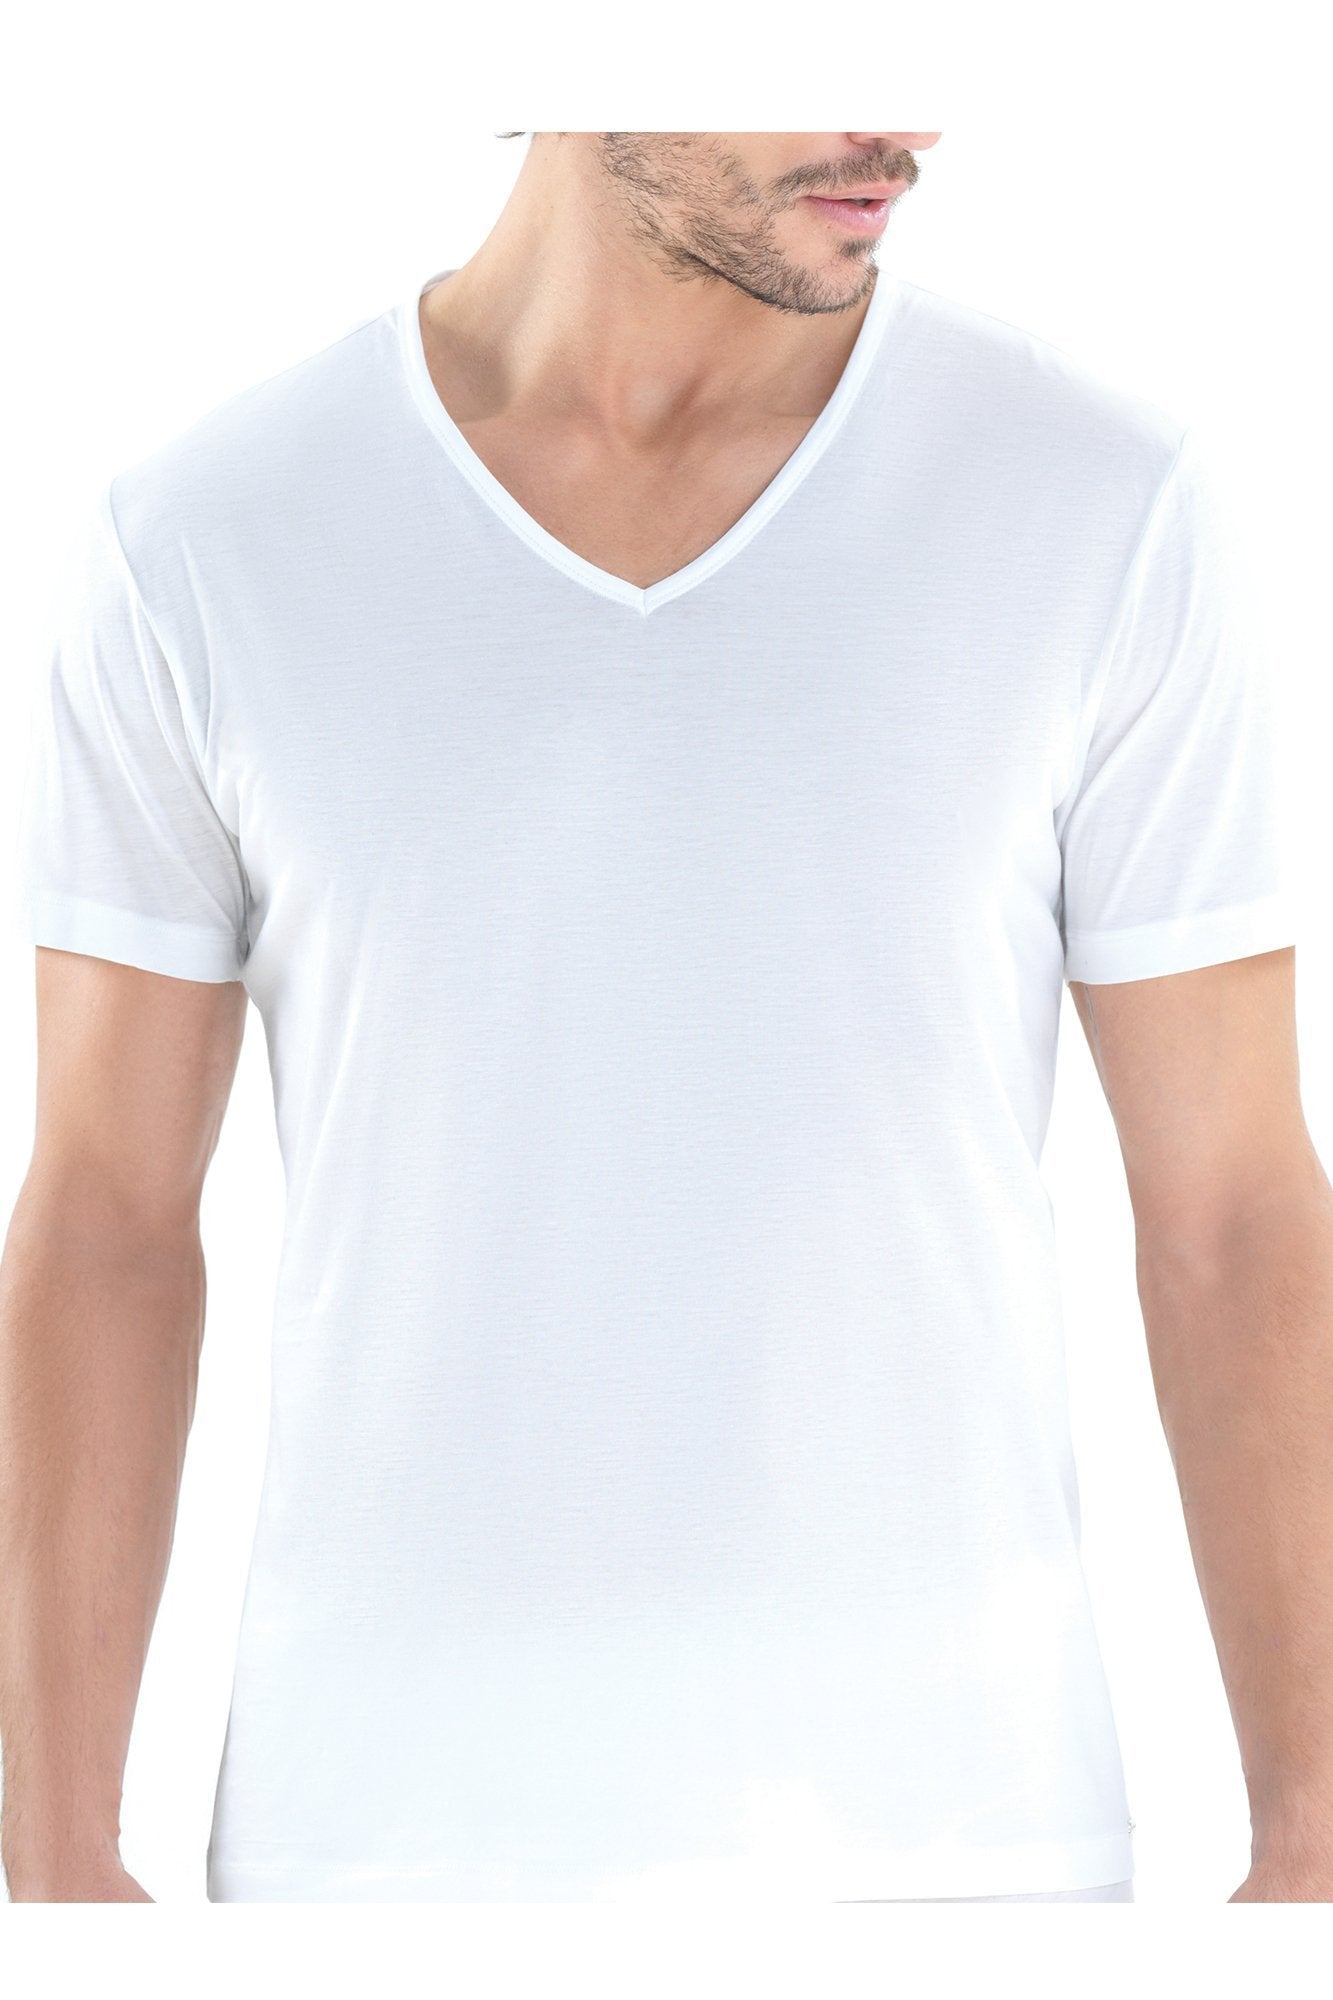 Mens' T-Shirt underwear blackspade White L 50% Supima 50% Micromodal